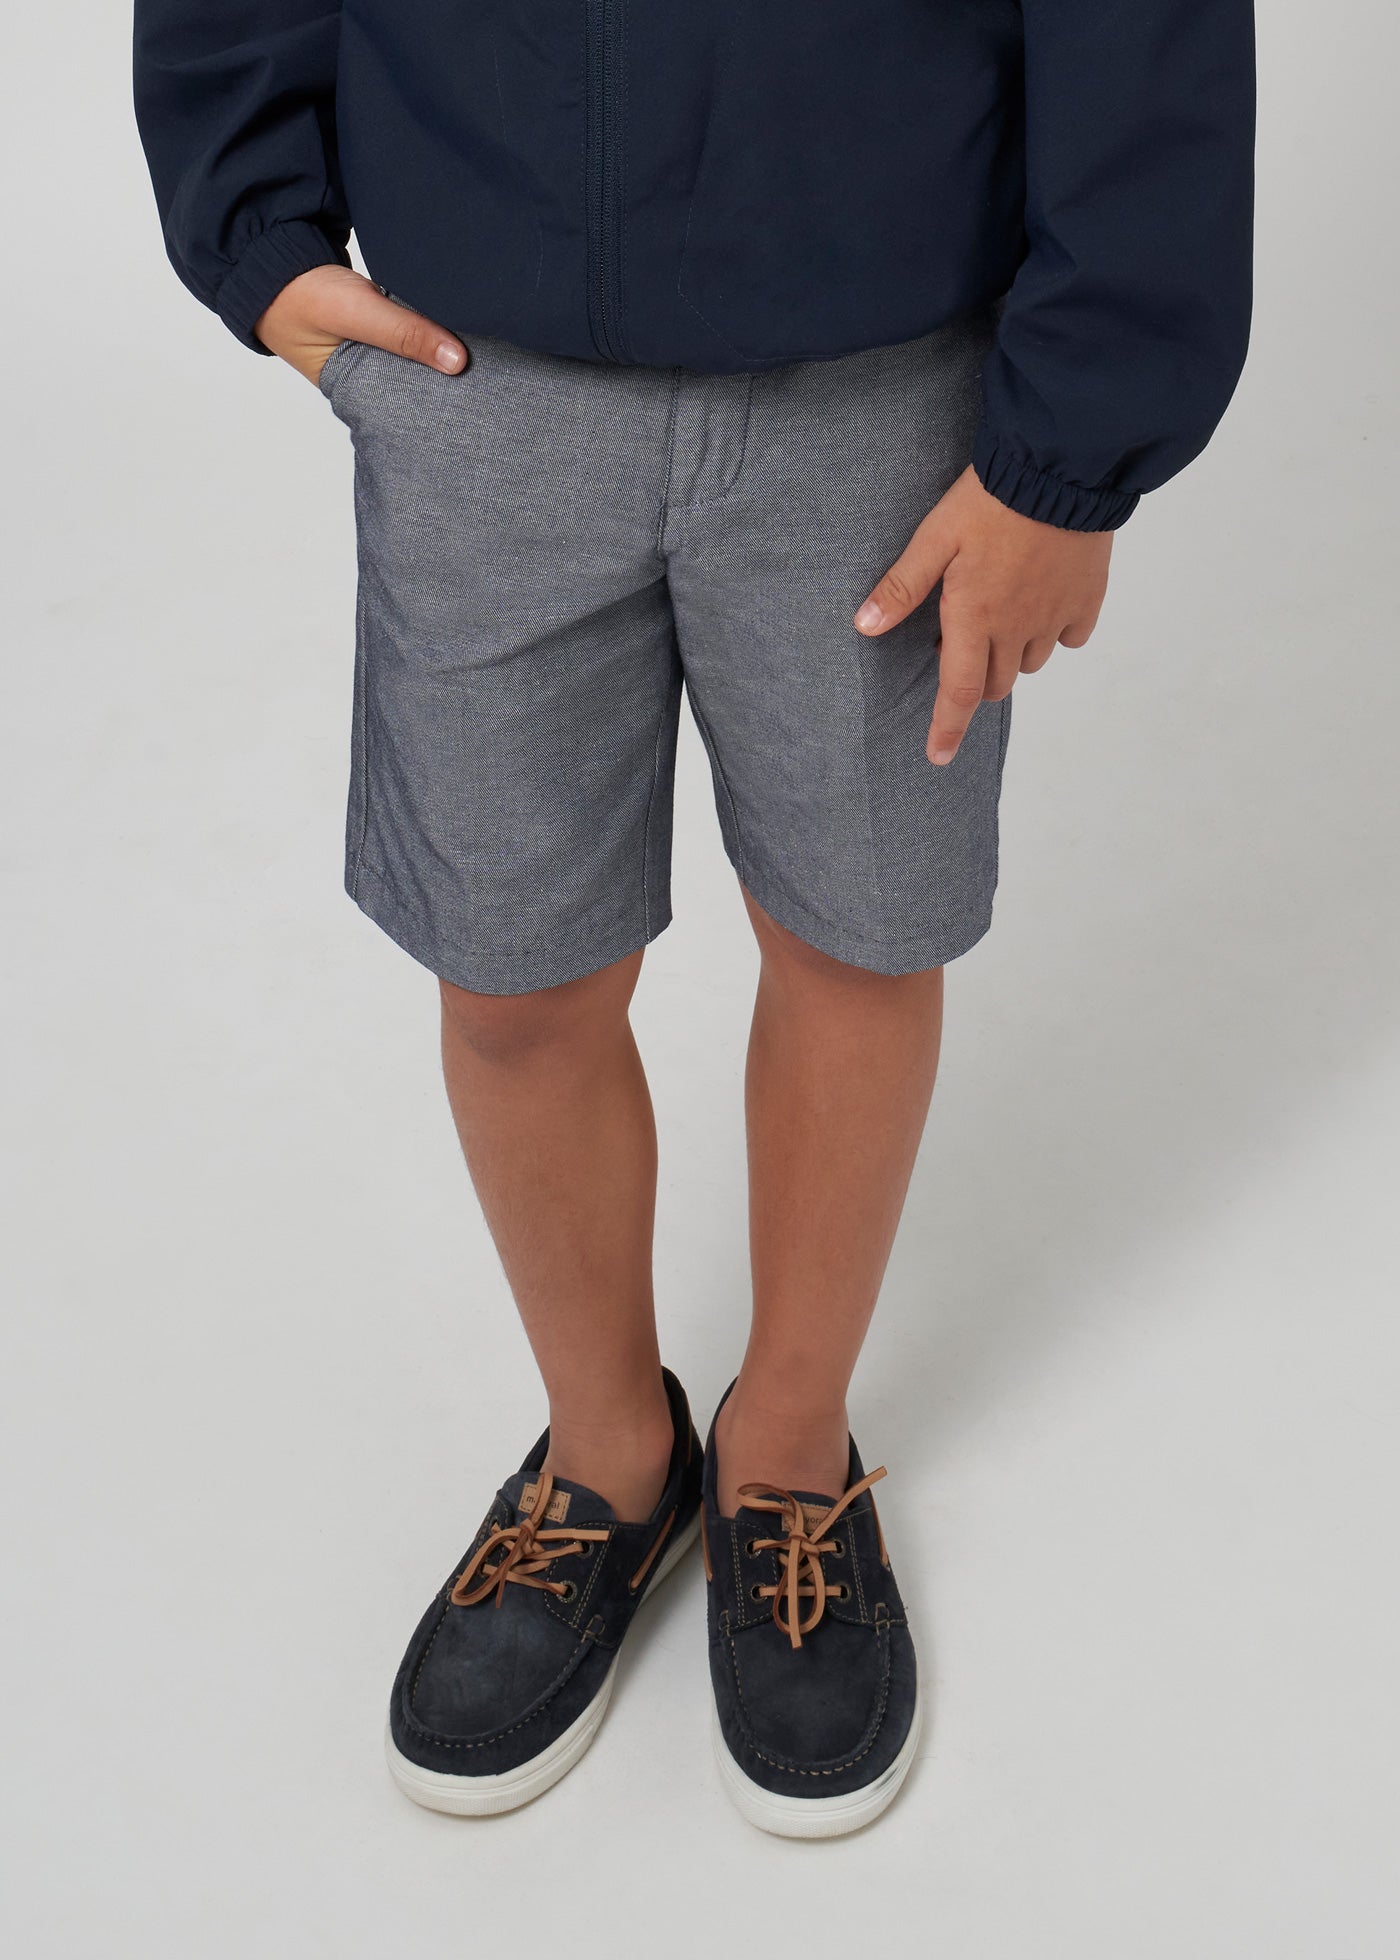 Nukutavake Boys Dressy Bermuda Shorts _ 6279-47